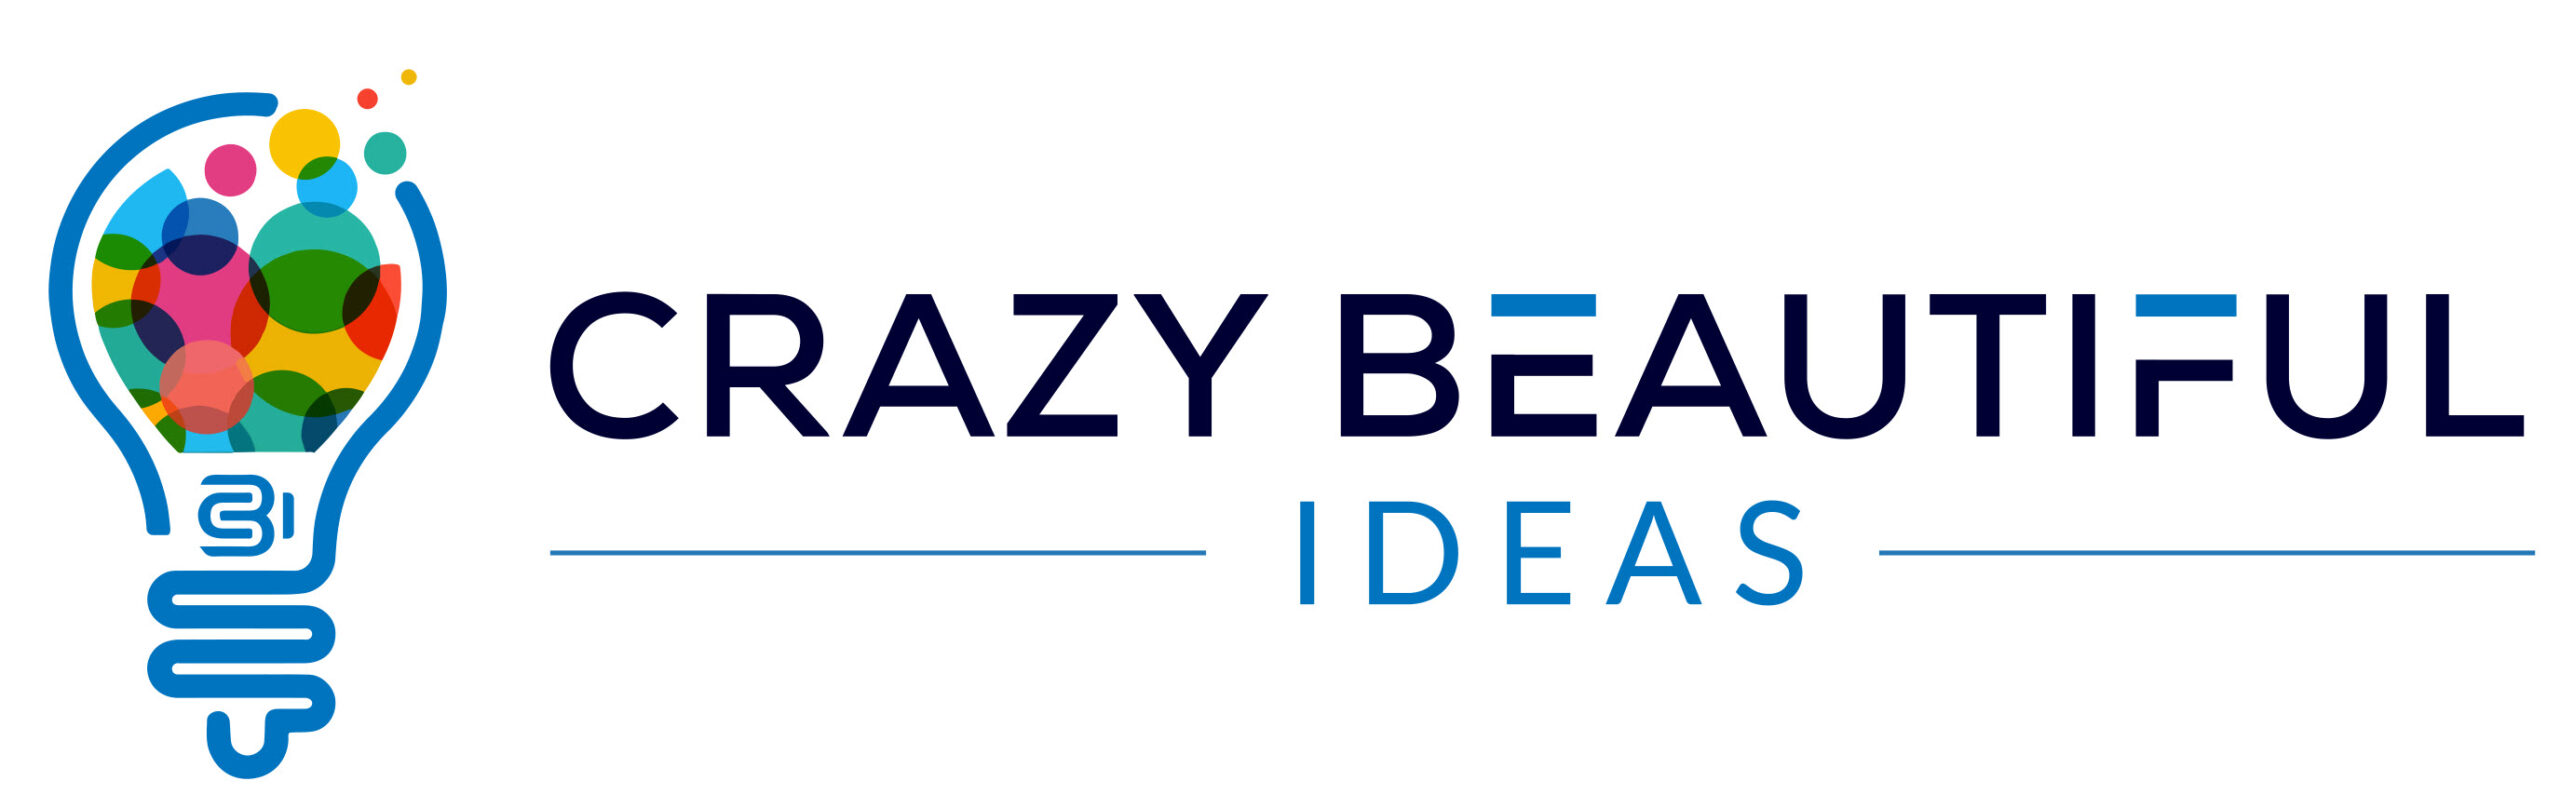 Crazy Beautiful Ideas